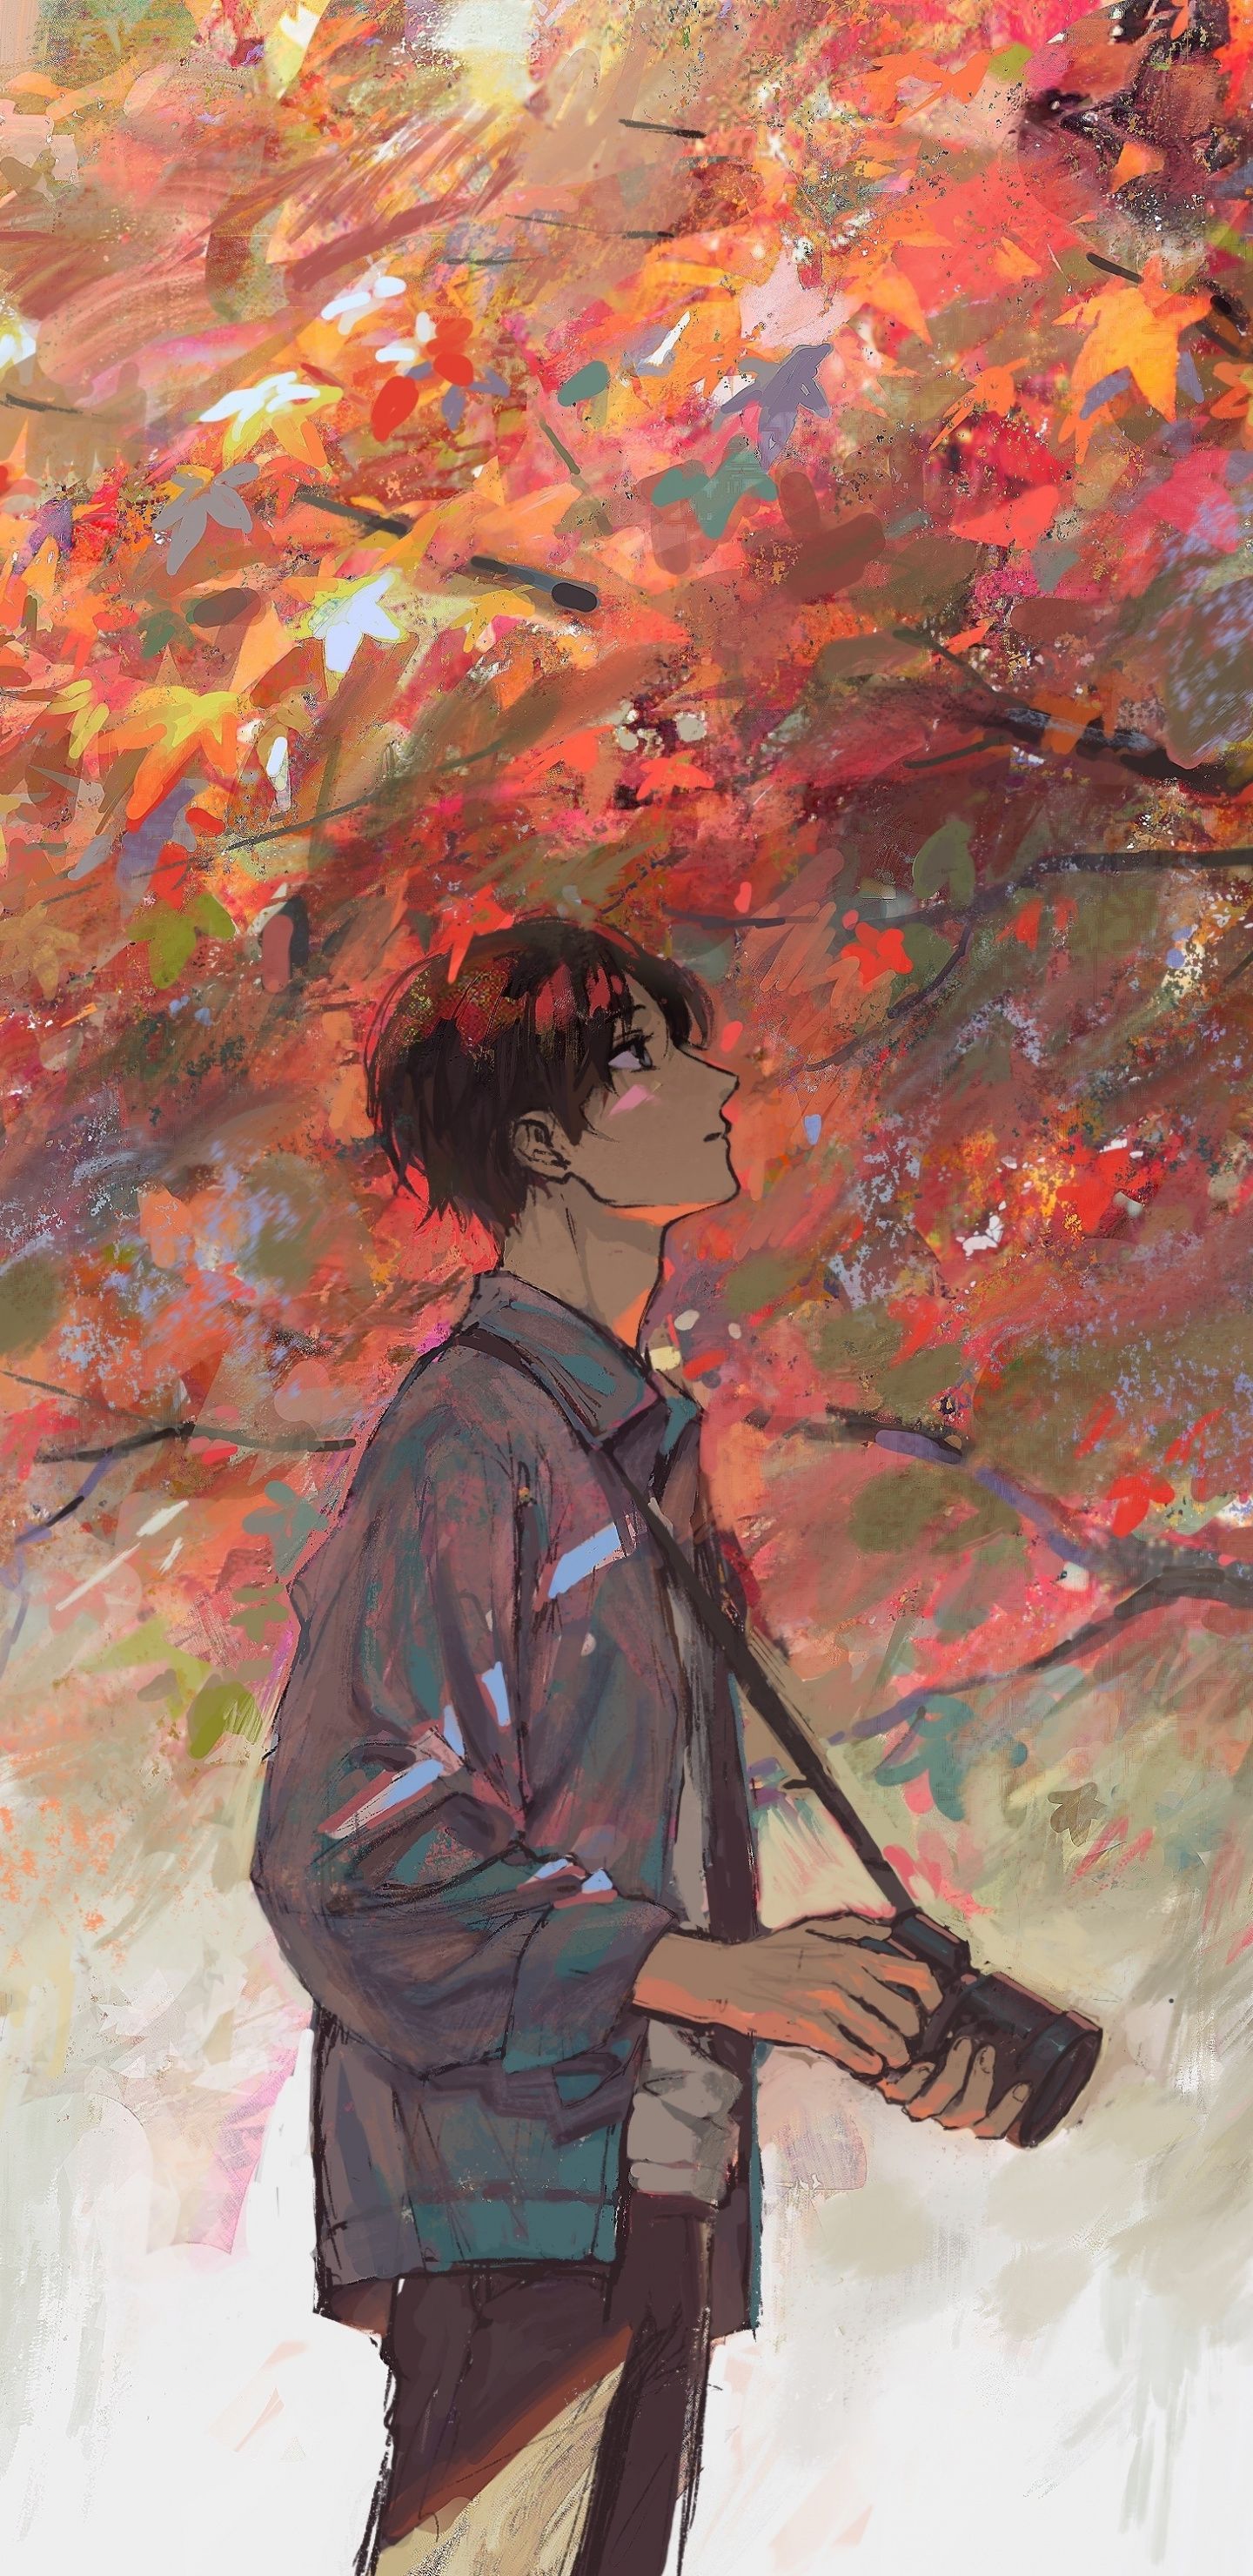 Anime boy, autumn, tree, artwork, 1440x2960 wallpaper from Android App. Anime artwork wallpaper, Anime scenery, Anime background wallpaper